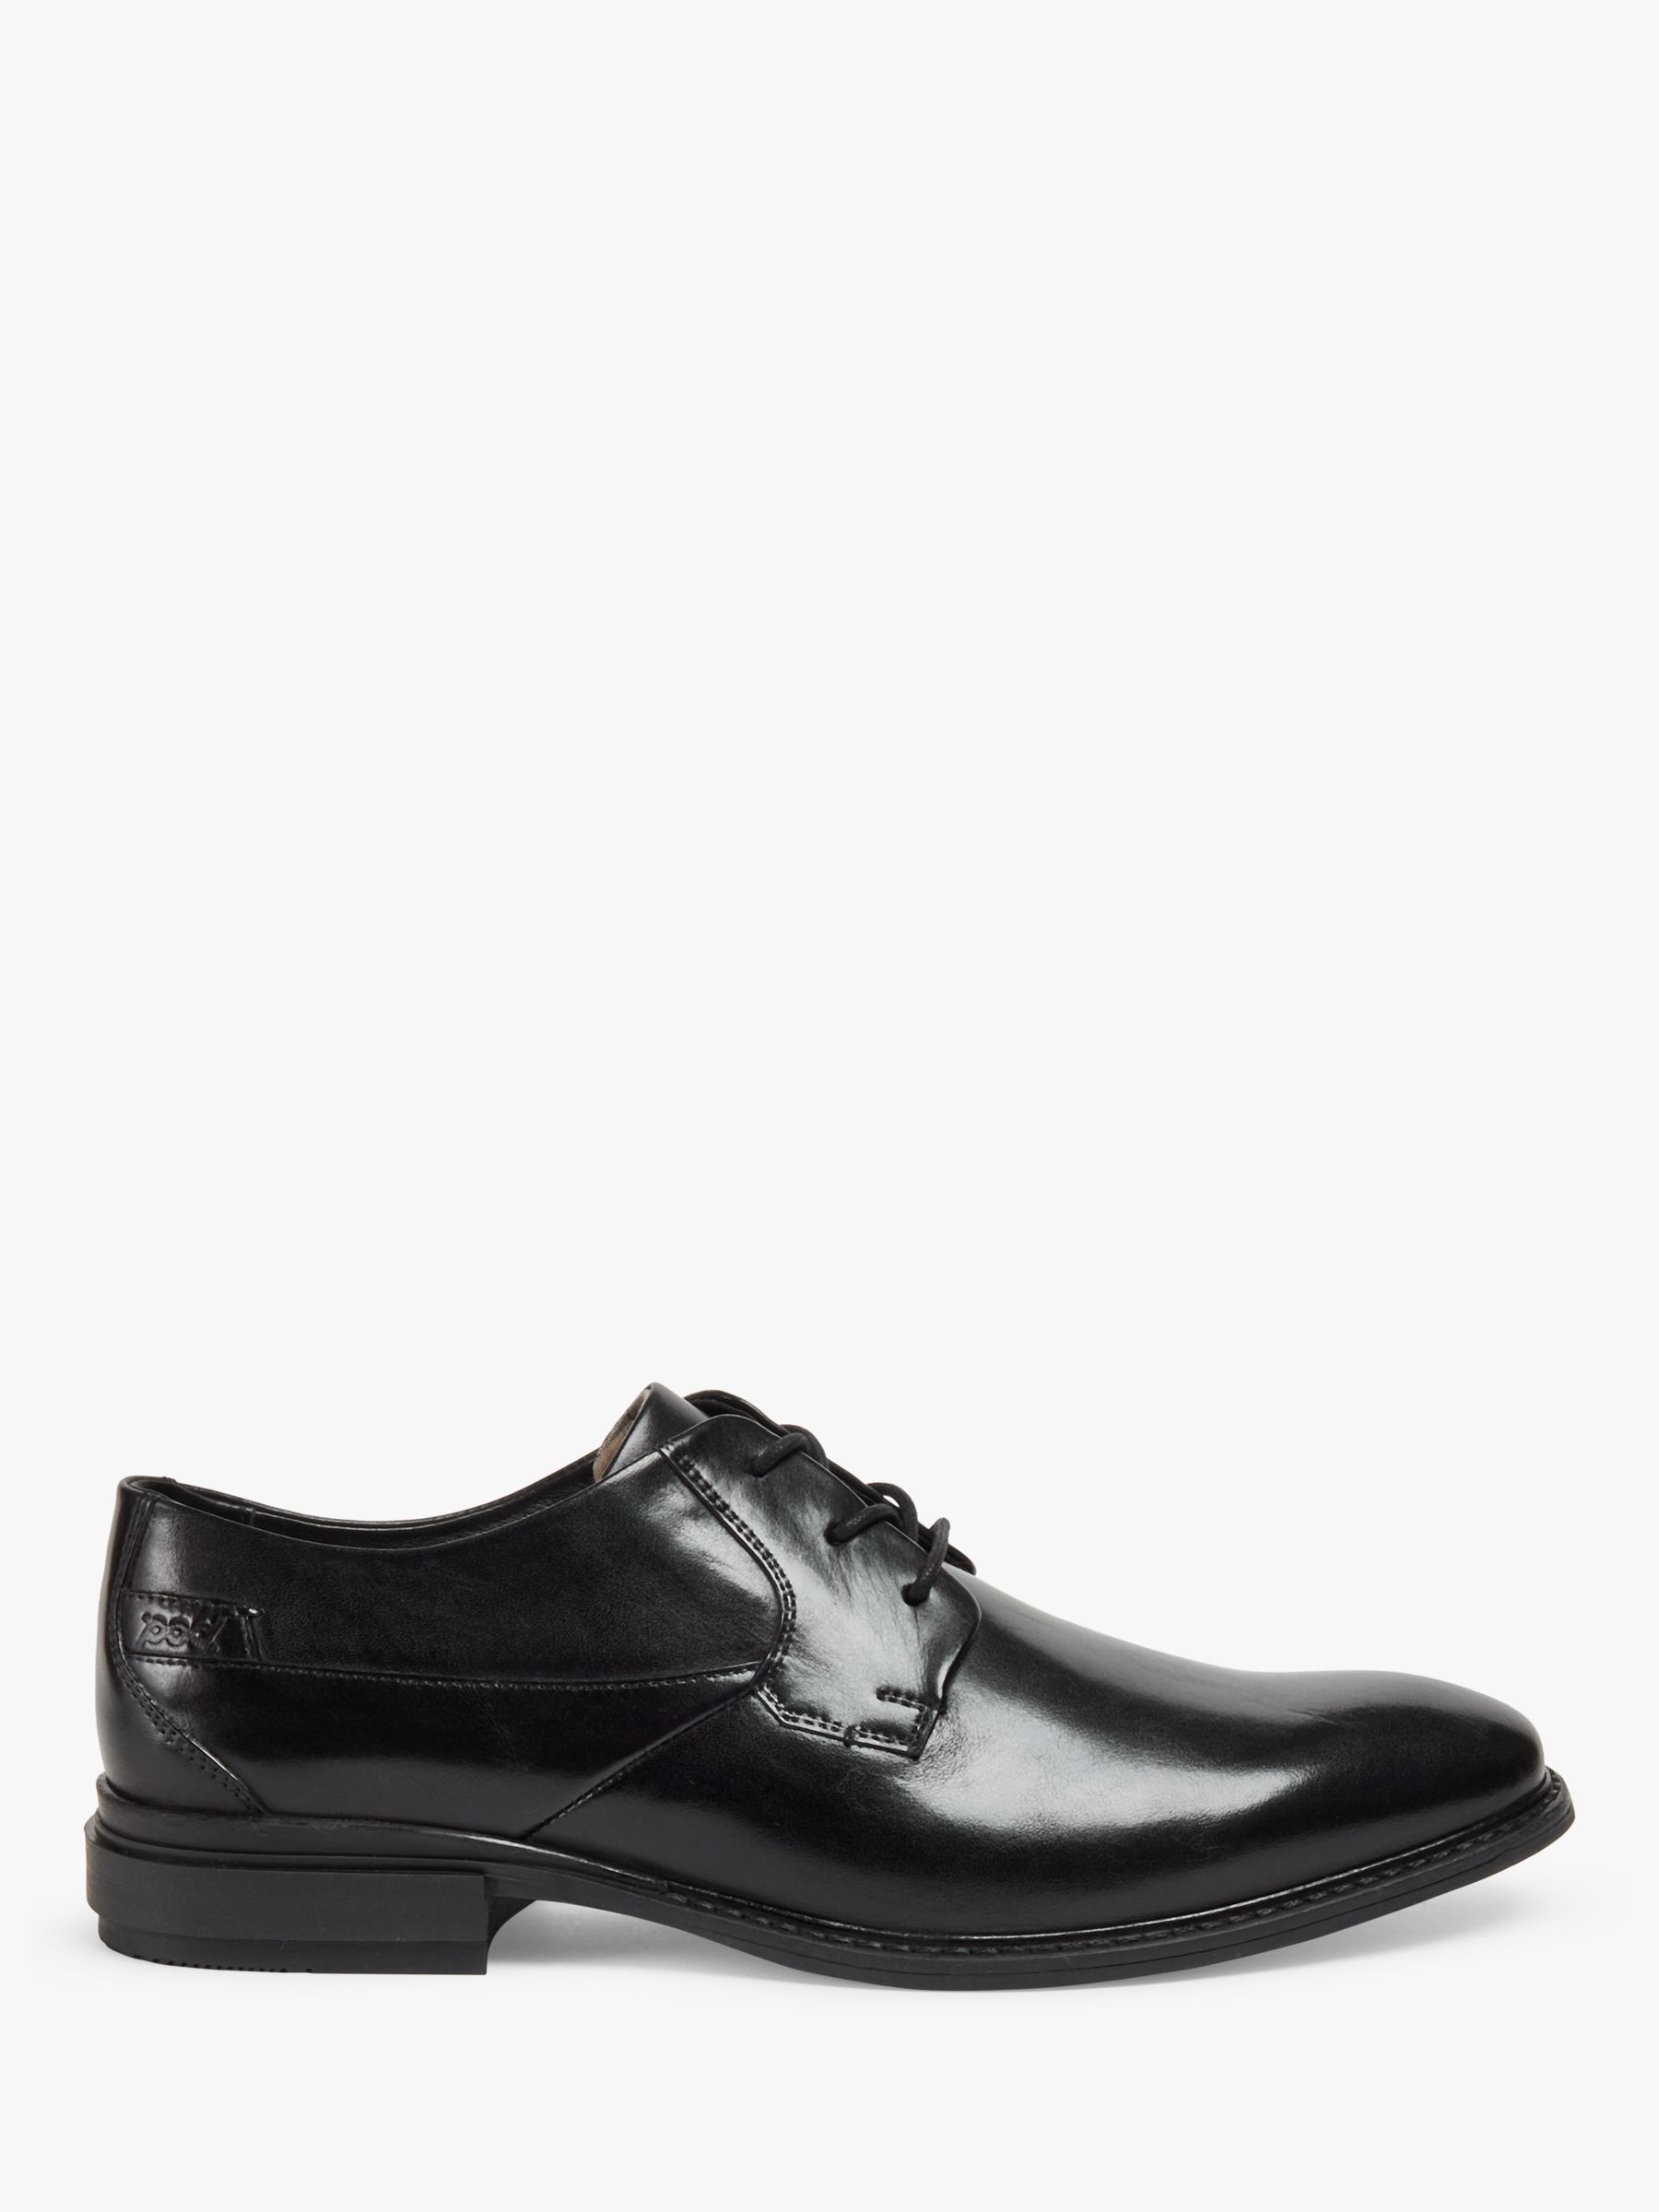 Pod Smyth Lace Up Shoes, Black at John Lewis & Partners